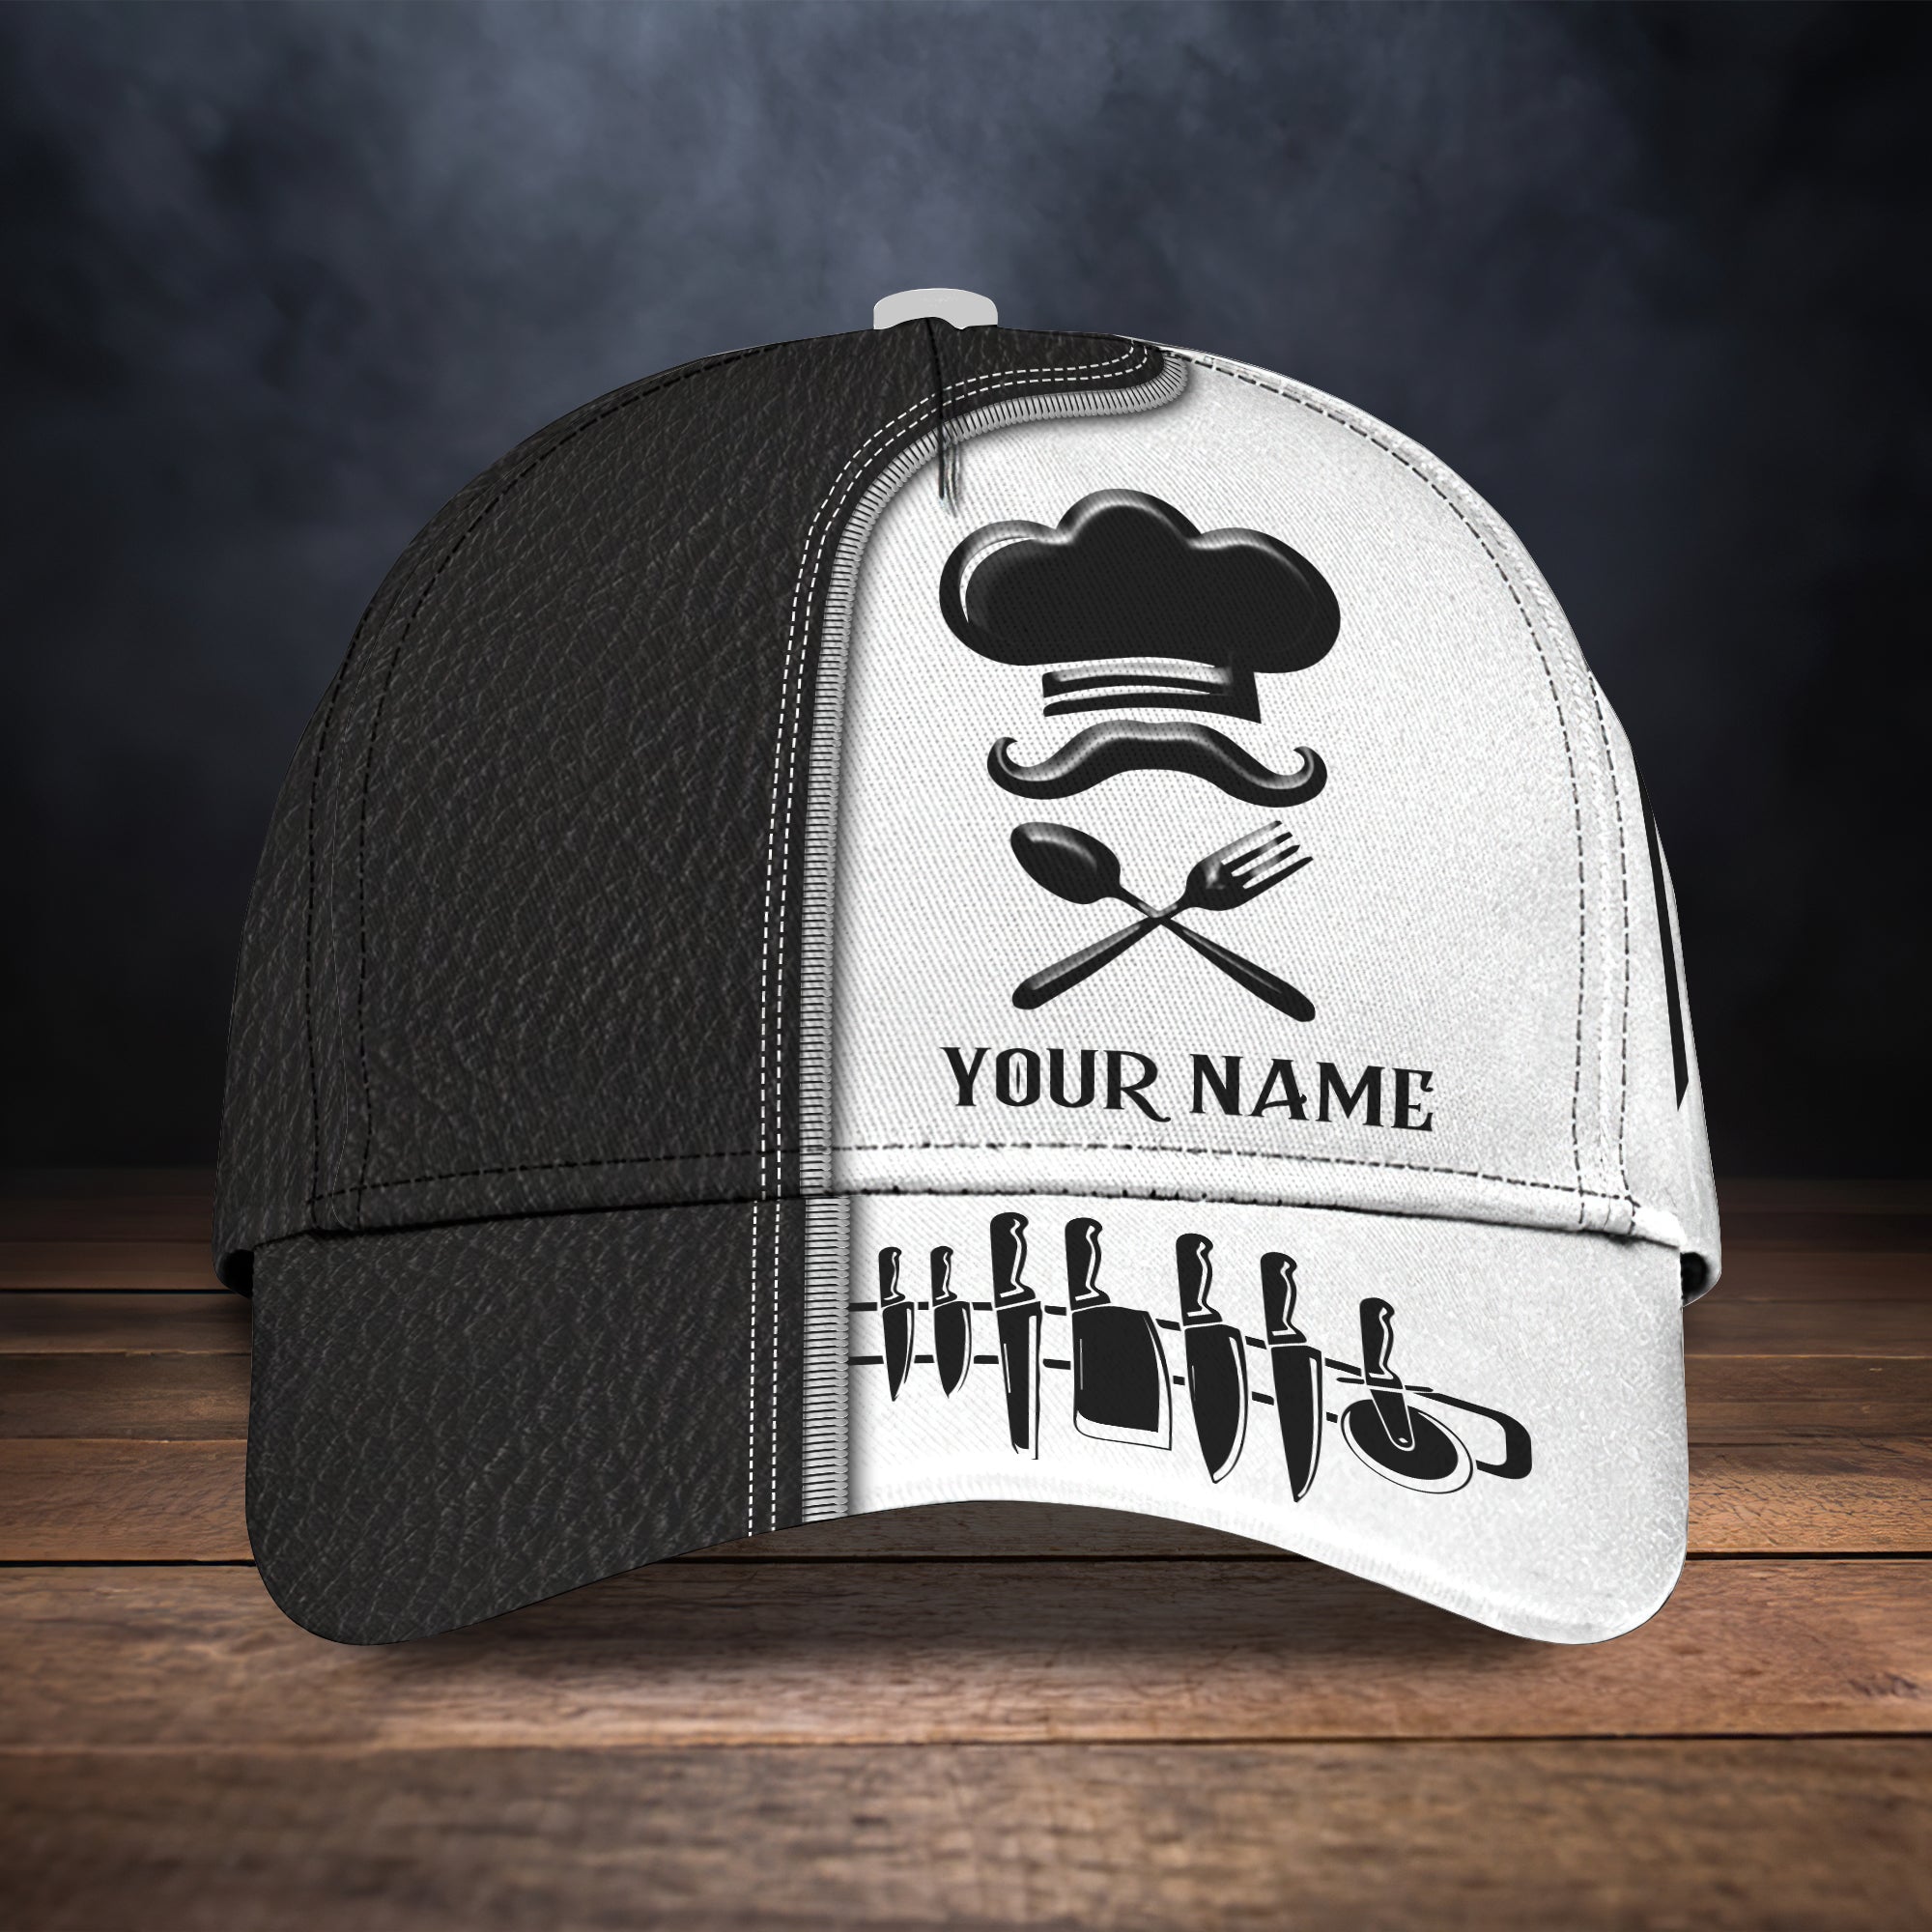 Personalized White Black 3D Chef Cap/ Master Chef Cap Hat/ Baseball Cap/ Classic Cap For Master Chef